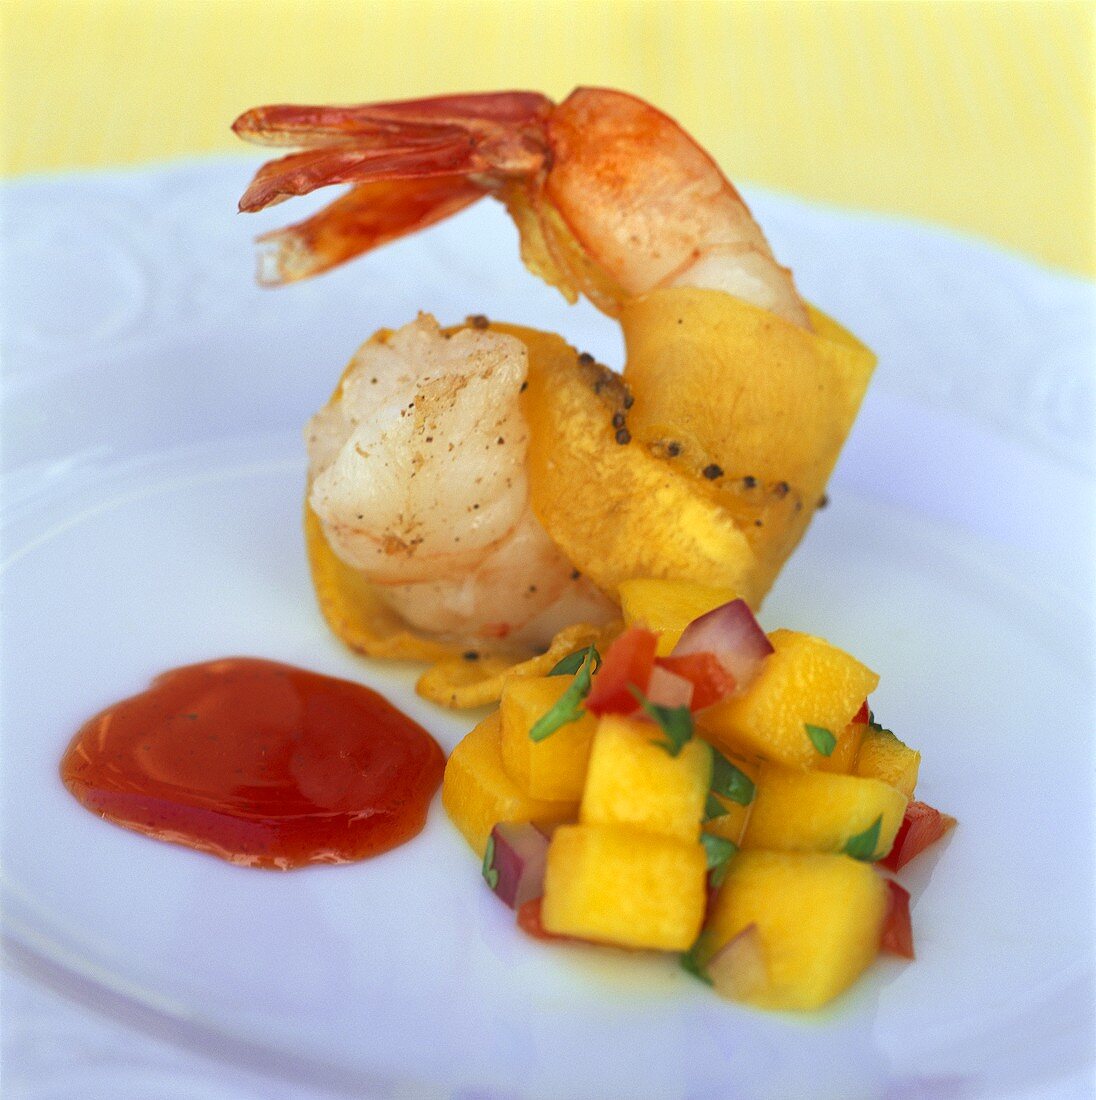 Shrimp with mango salsa and passion fruit sauce